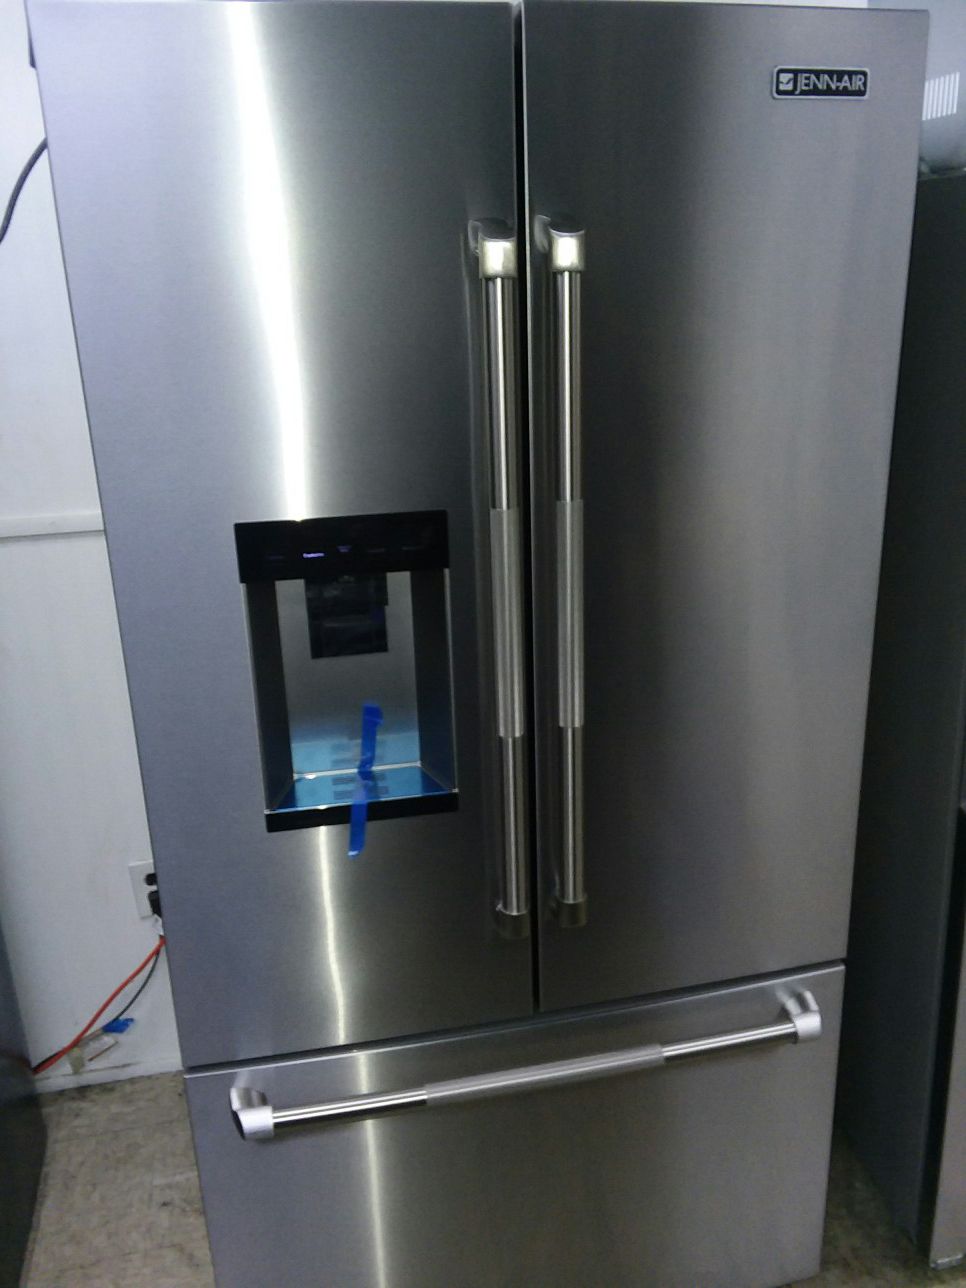 Jenn-Air Stainless steel refrigerator